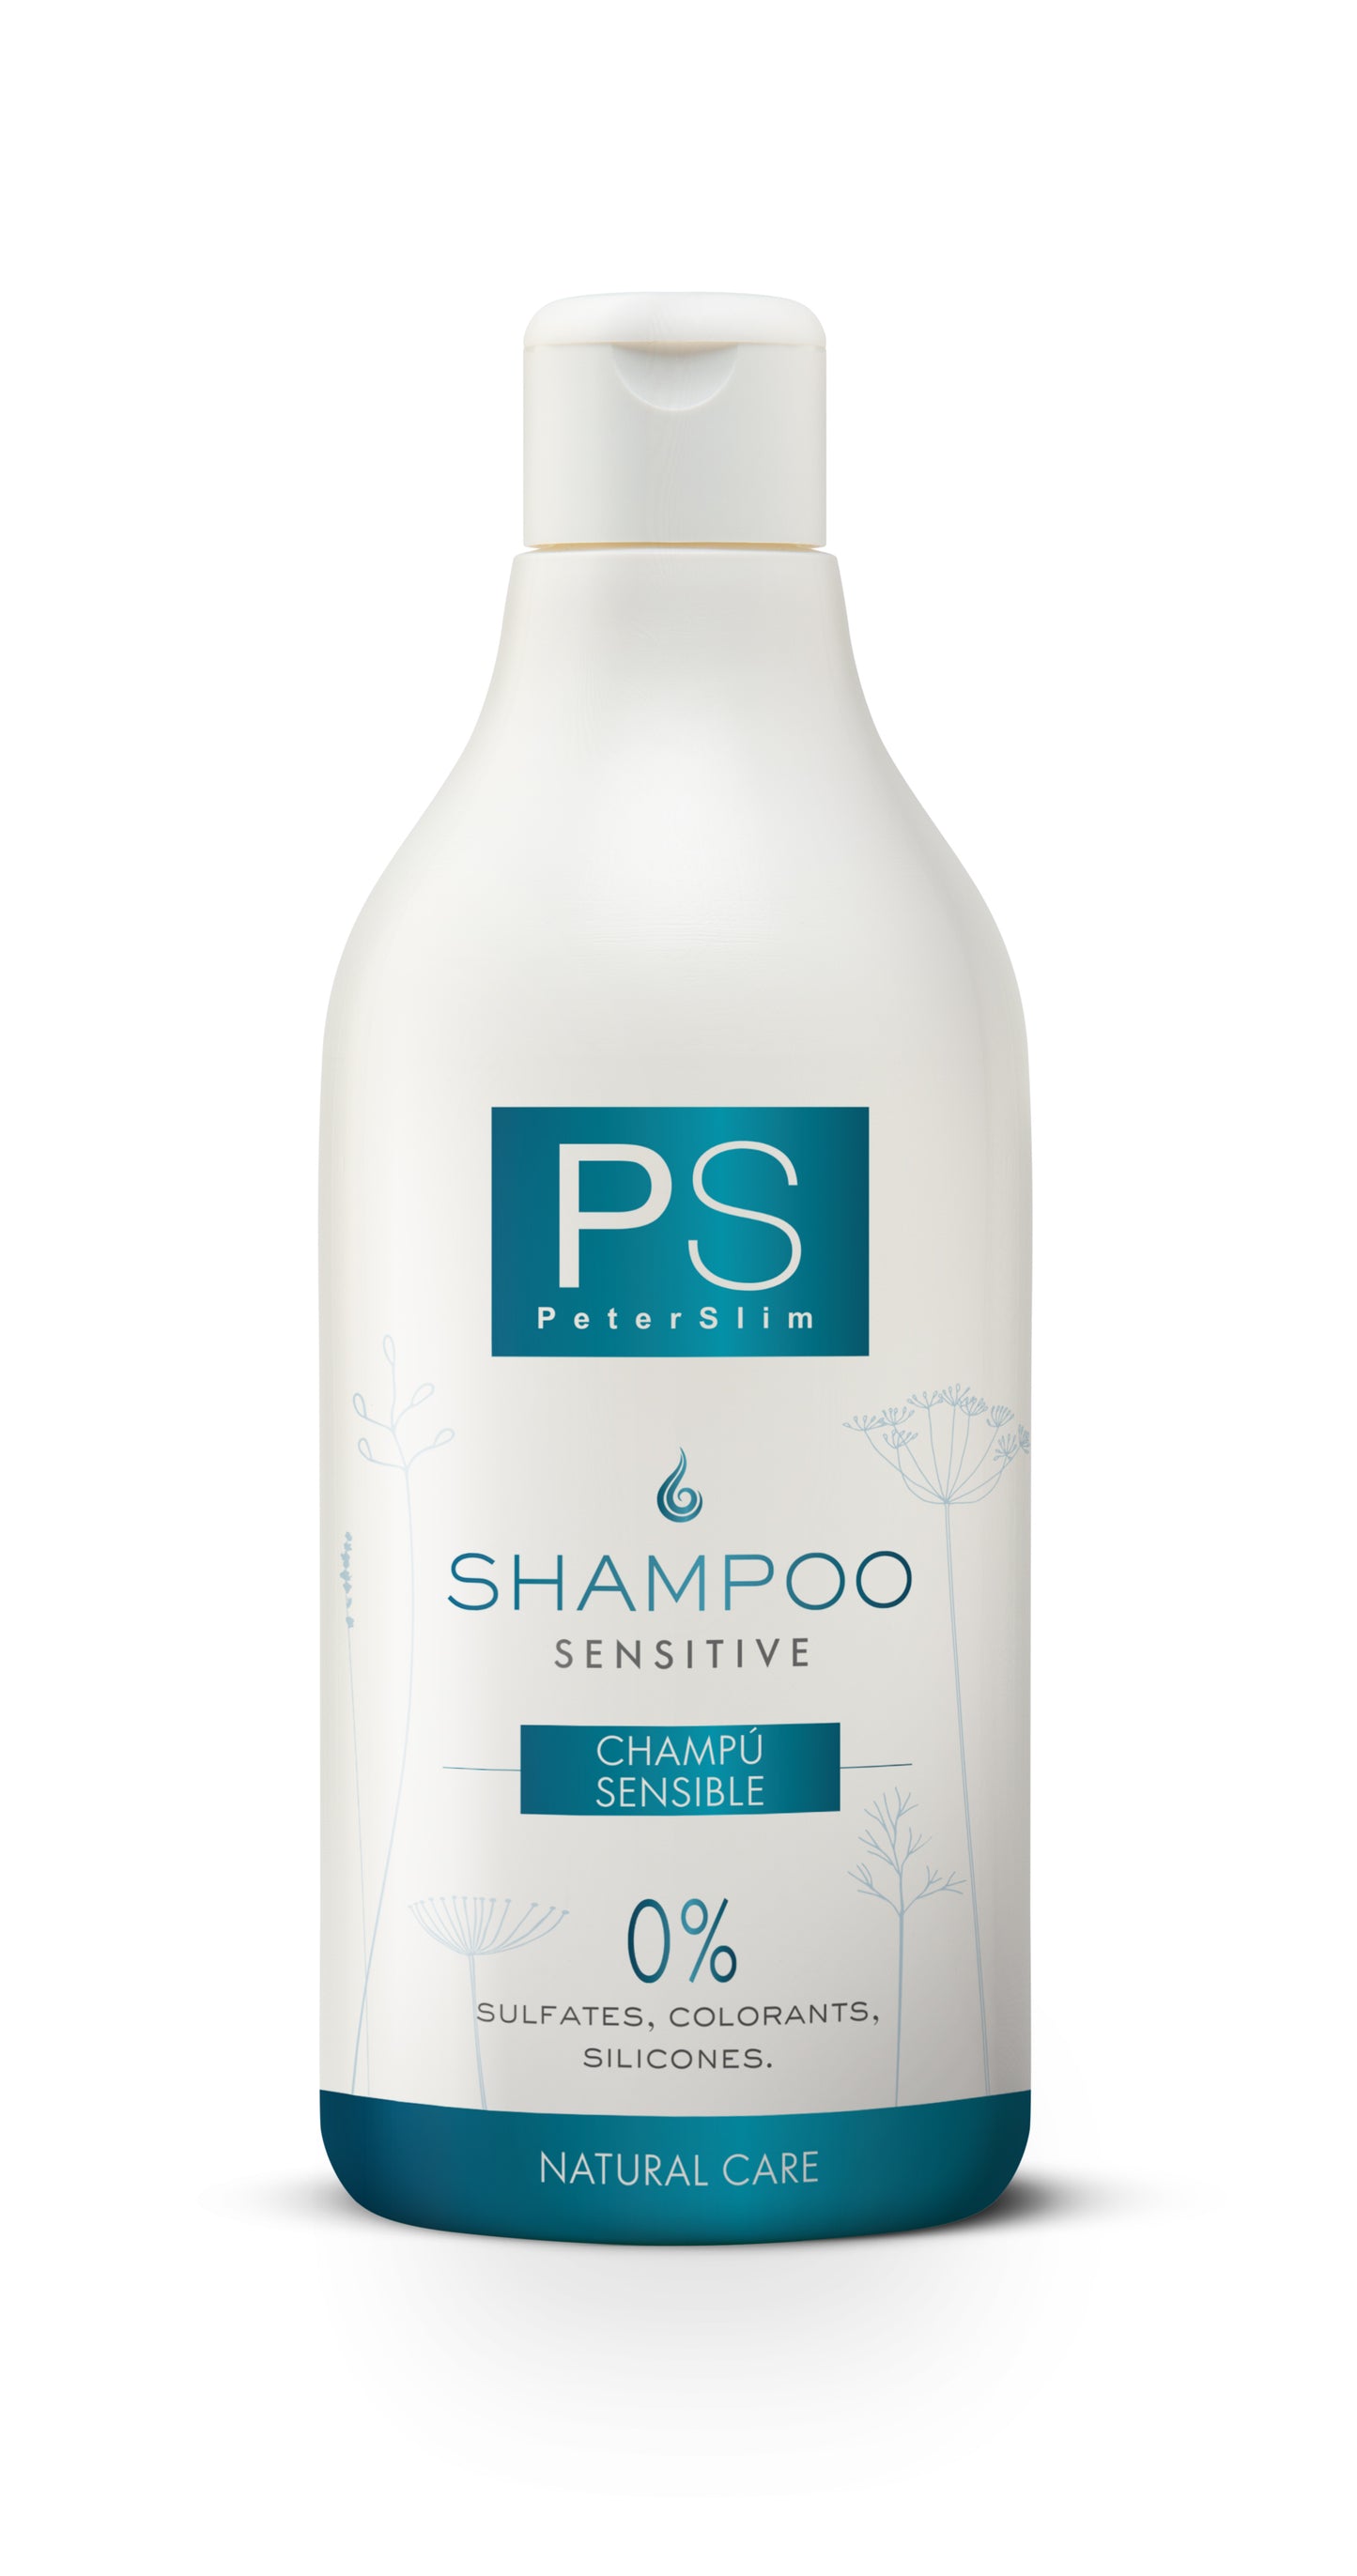 PS Sensitive Shampoo